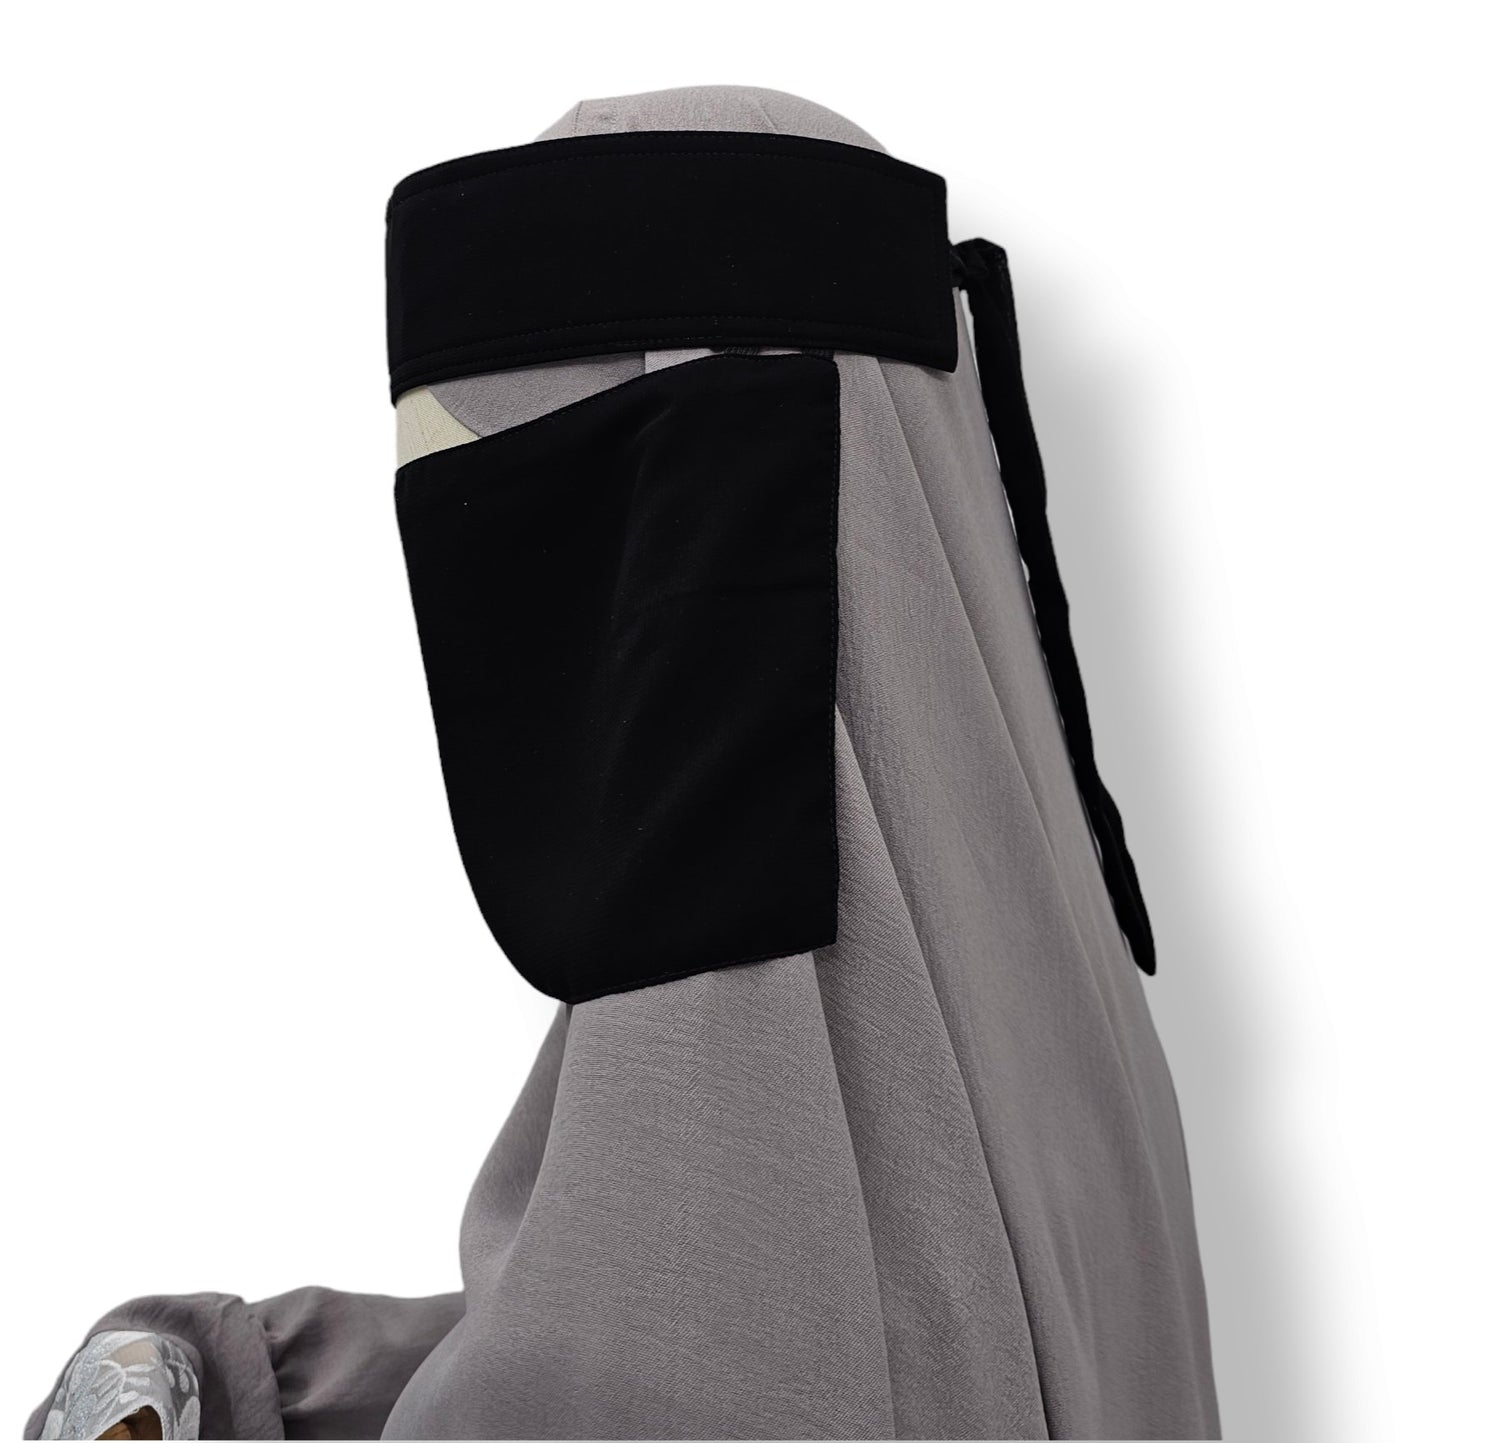 Niqabs